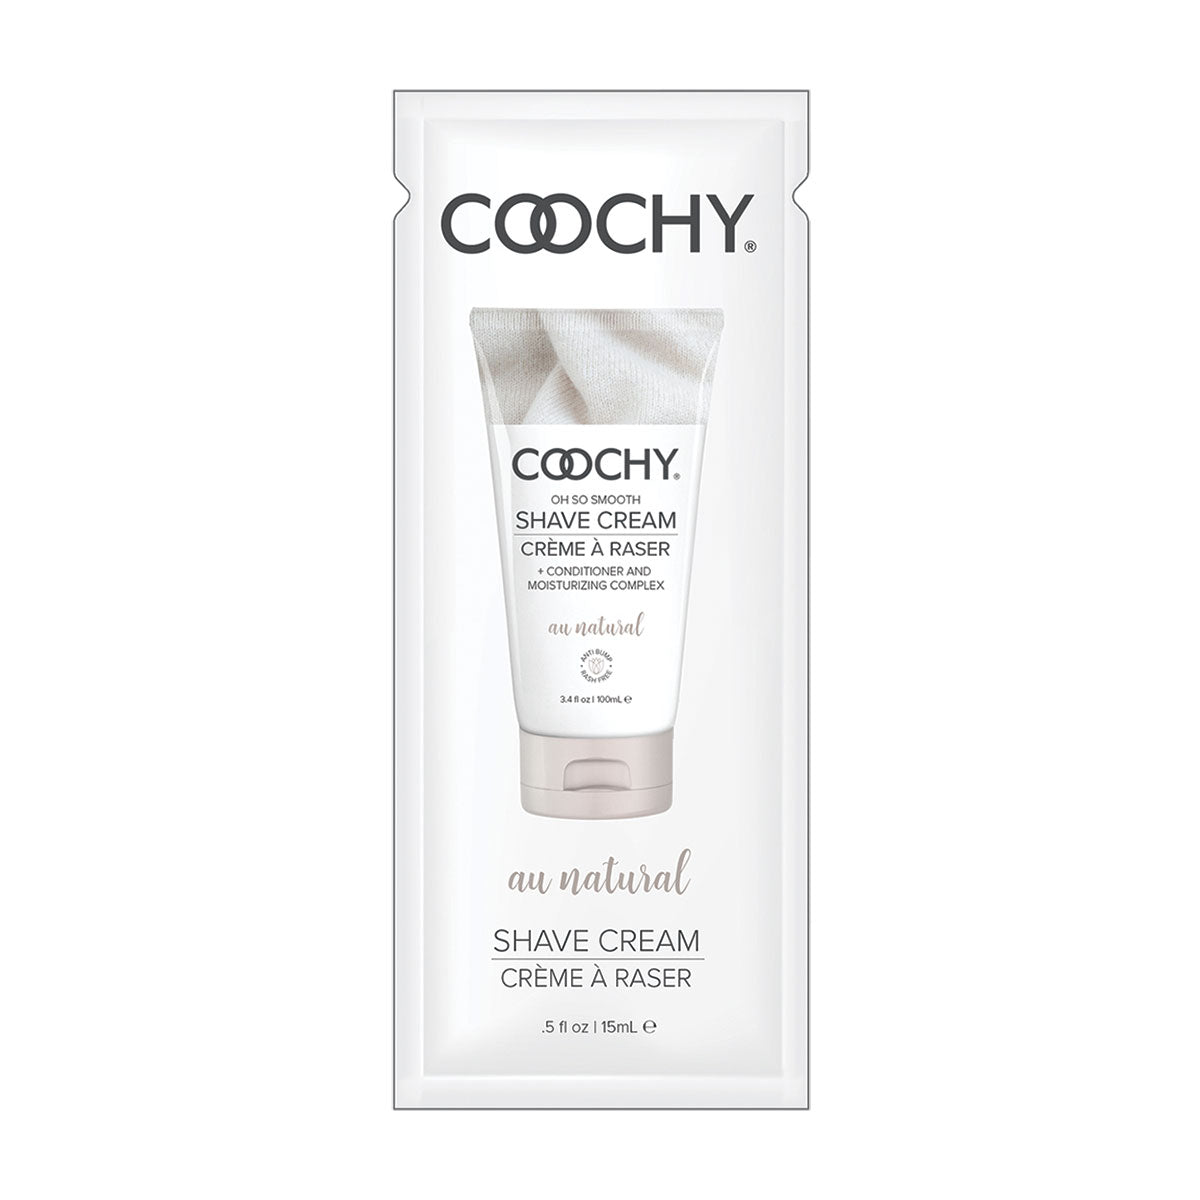 Coochy Shave Cream 15ml. 24pc. Display - Au Natural [A01805]